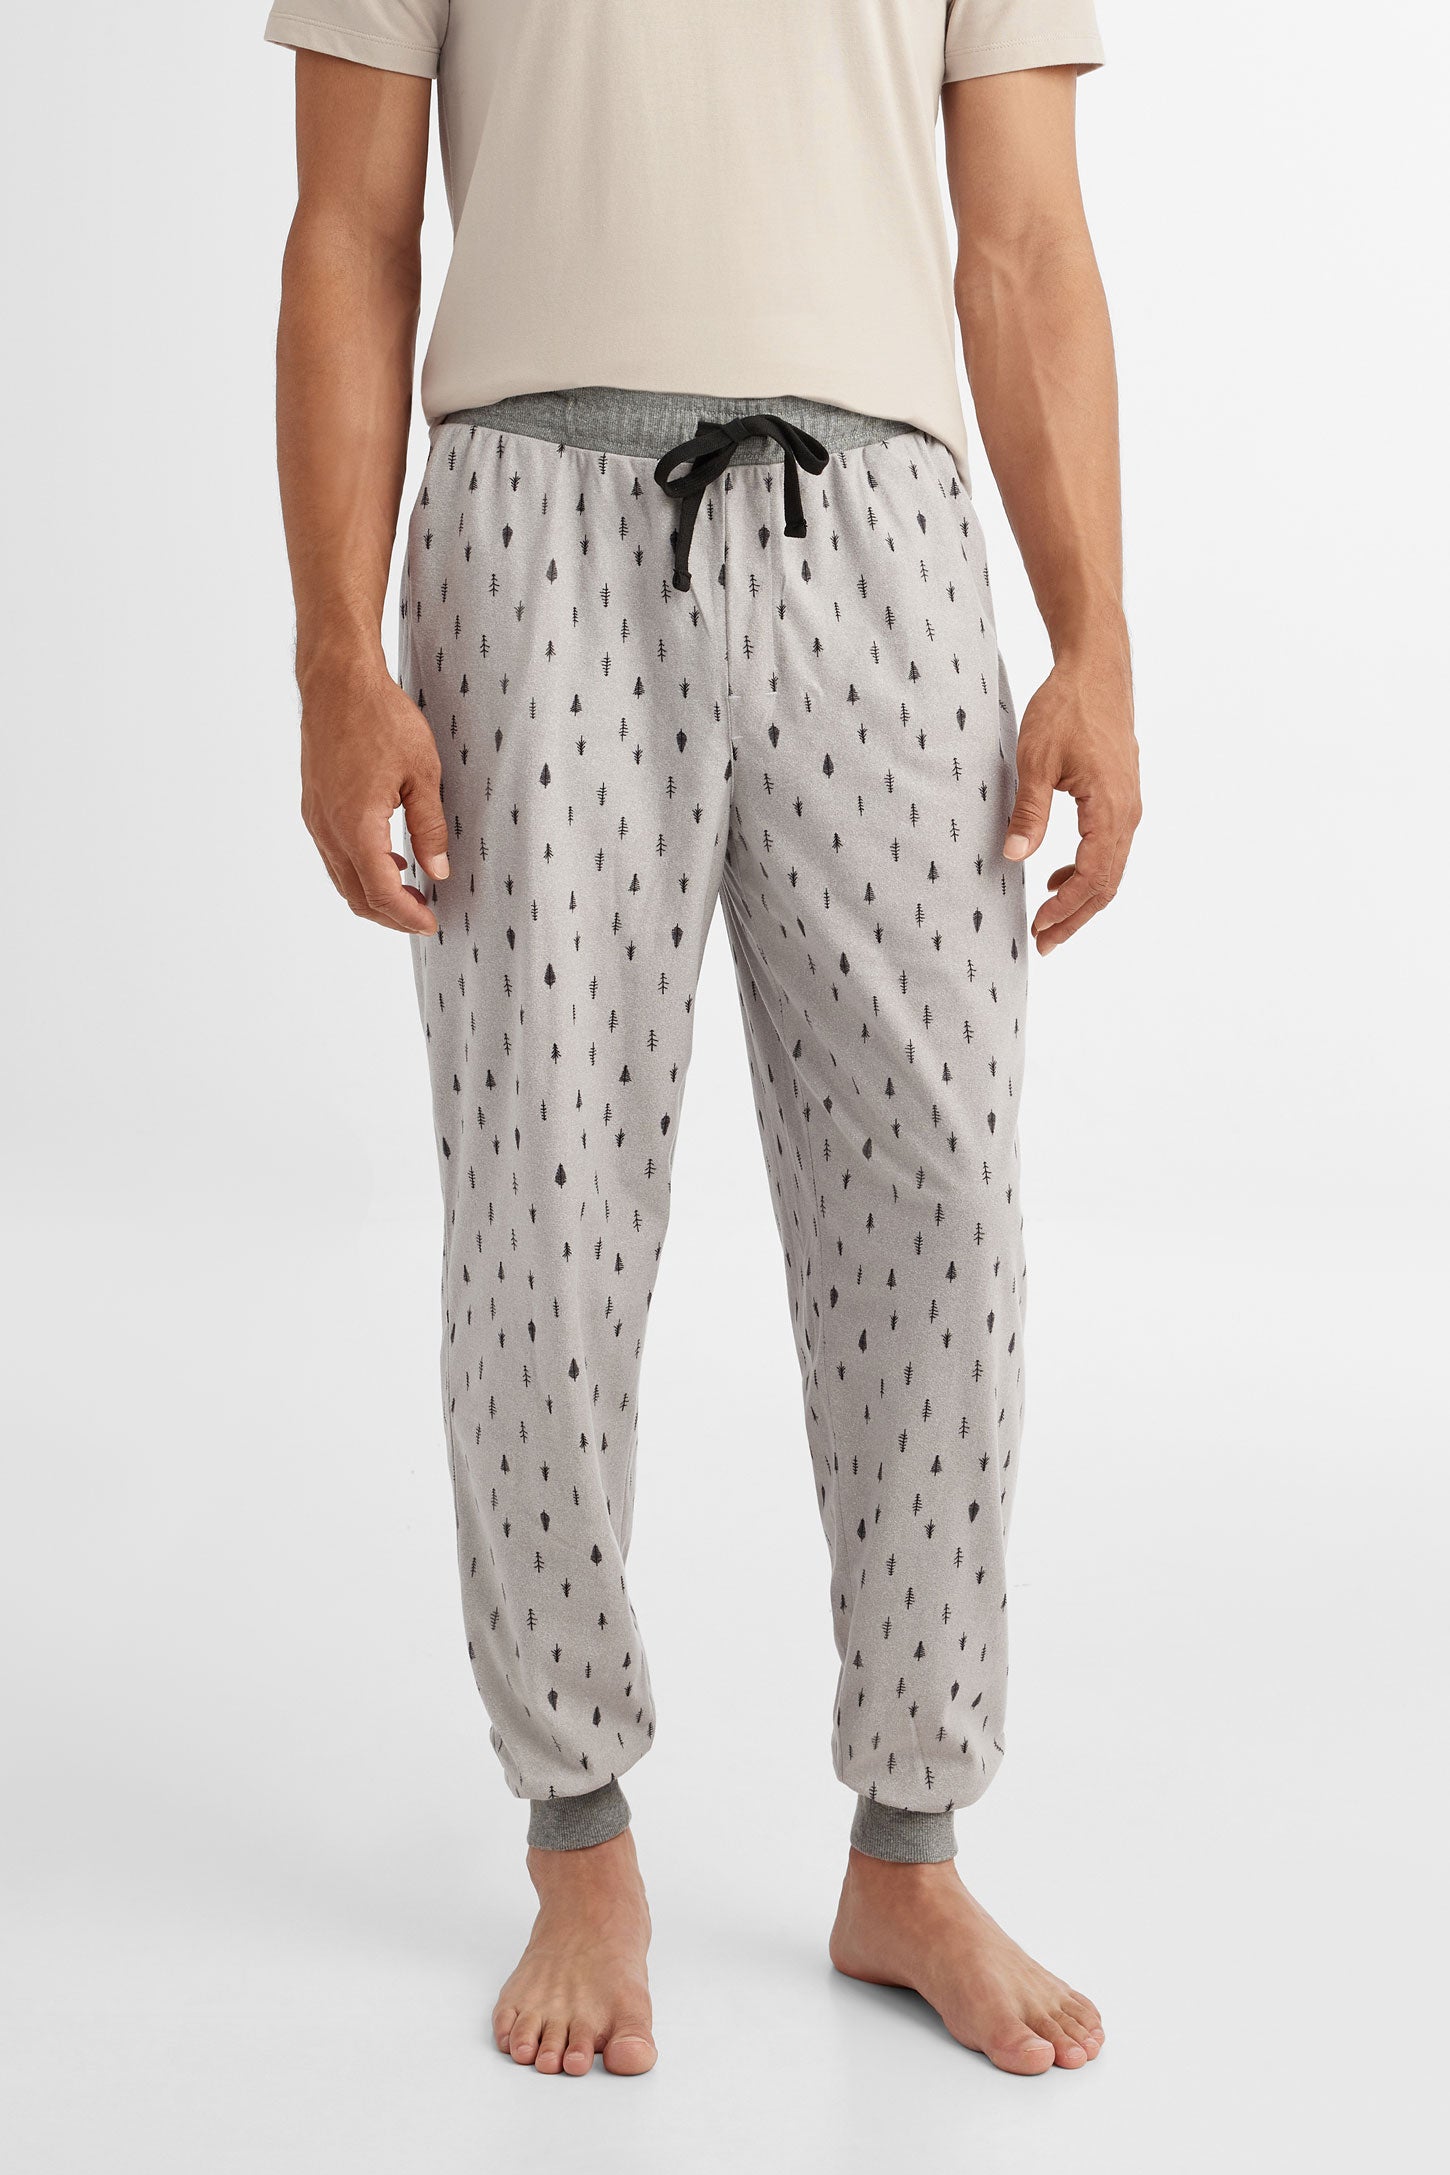 Pantalon jogger pyjama  - Homme && GRIS MIXTE